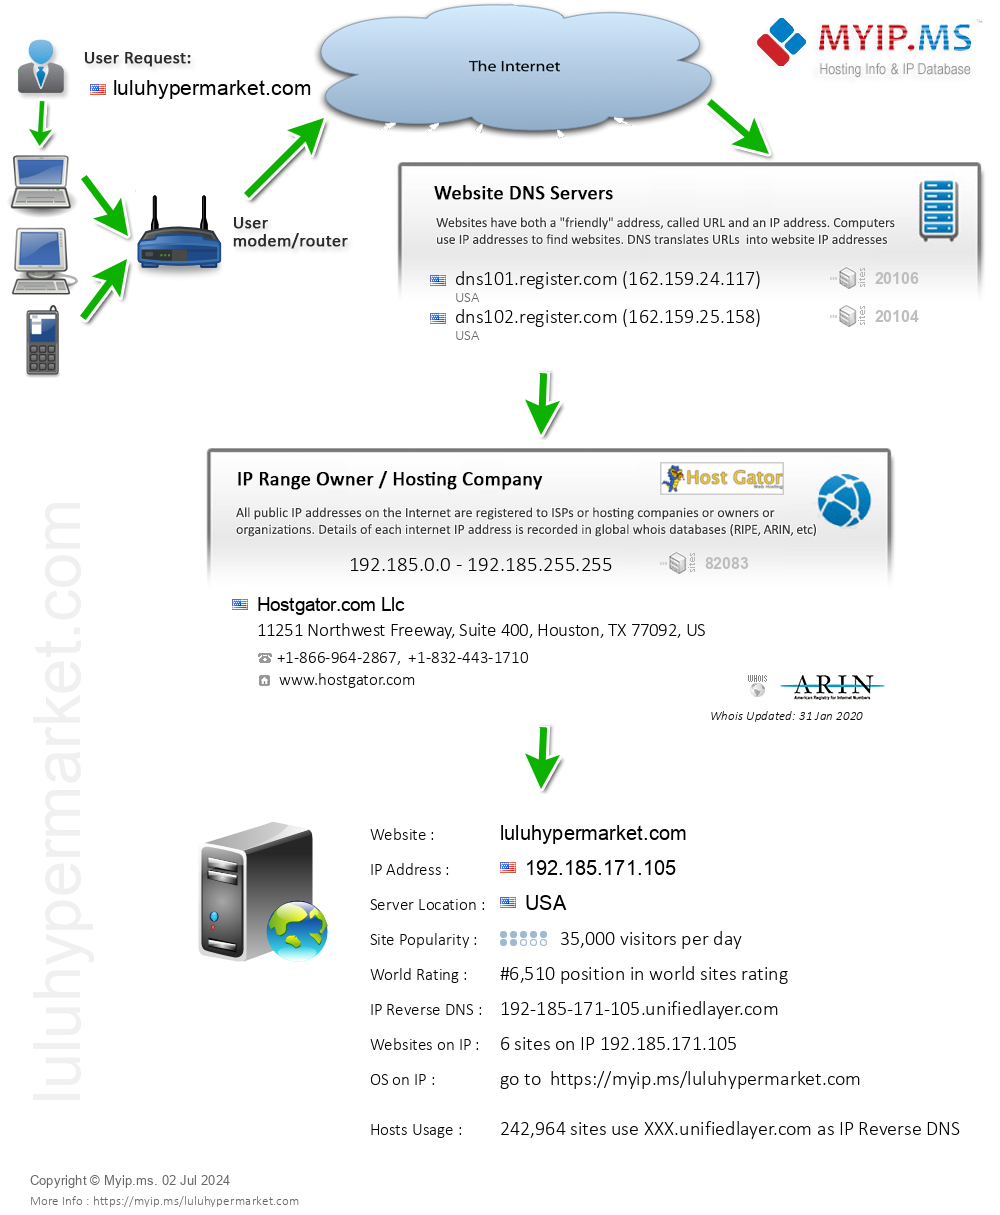 Luluhypermarket.com - Website Hosting Visual IP Diagram